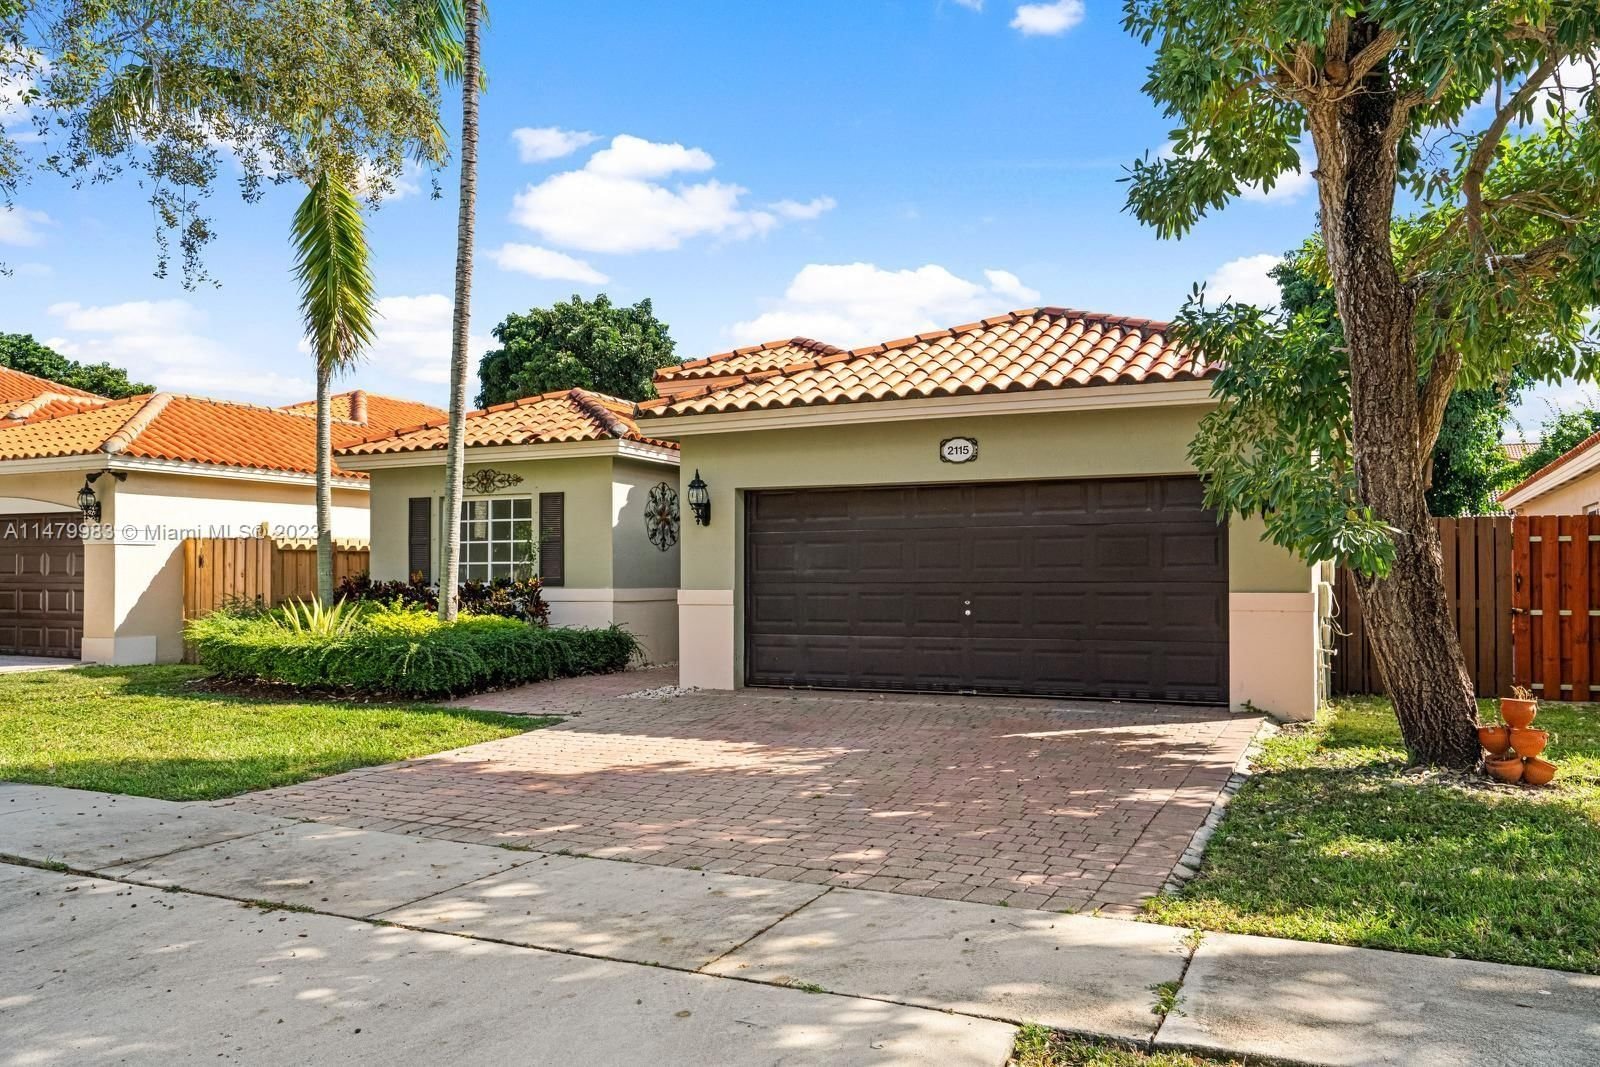 Real estate property located at 2115 36th Ave, Miami-Dade County, SONARA AT MALIBU BAY, Homestead, FL